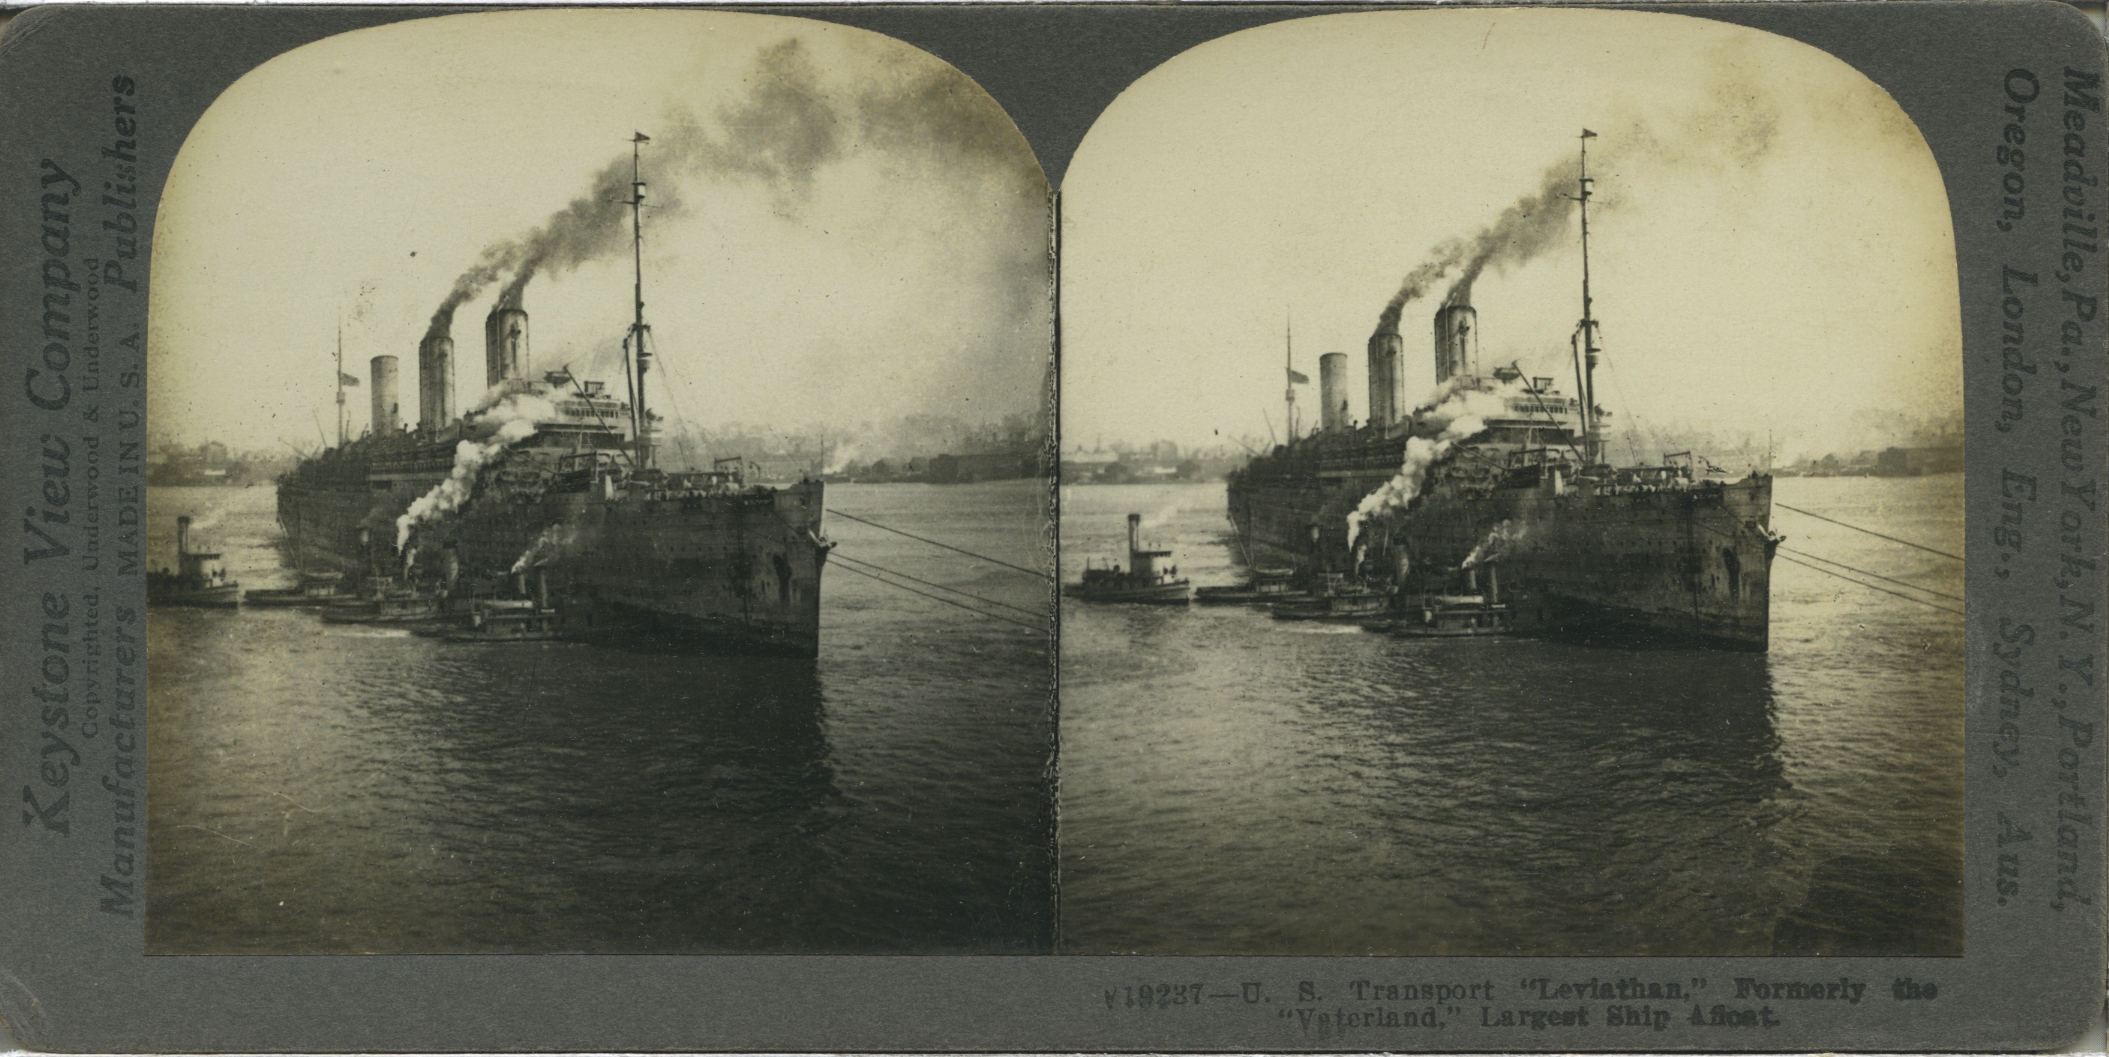 U.S. Transport "Leviathan," Formerly the "Vaterland." Largest Ship Afloat